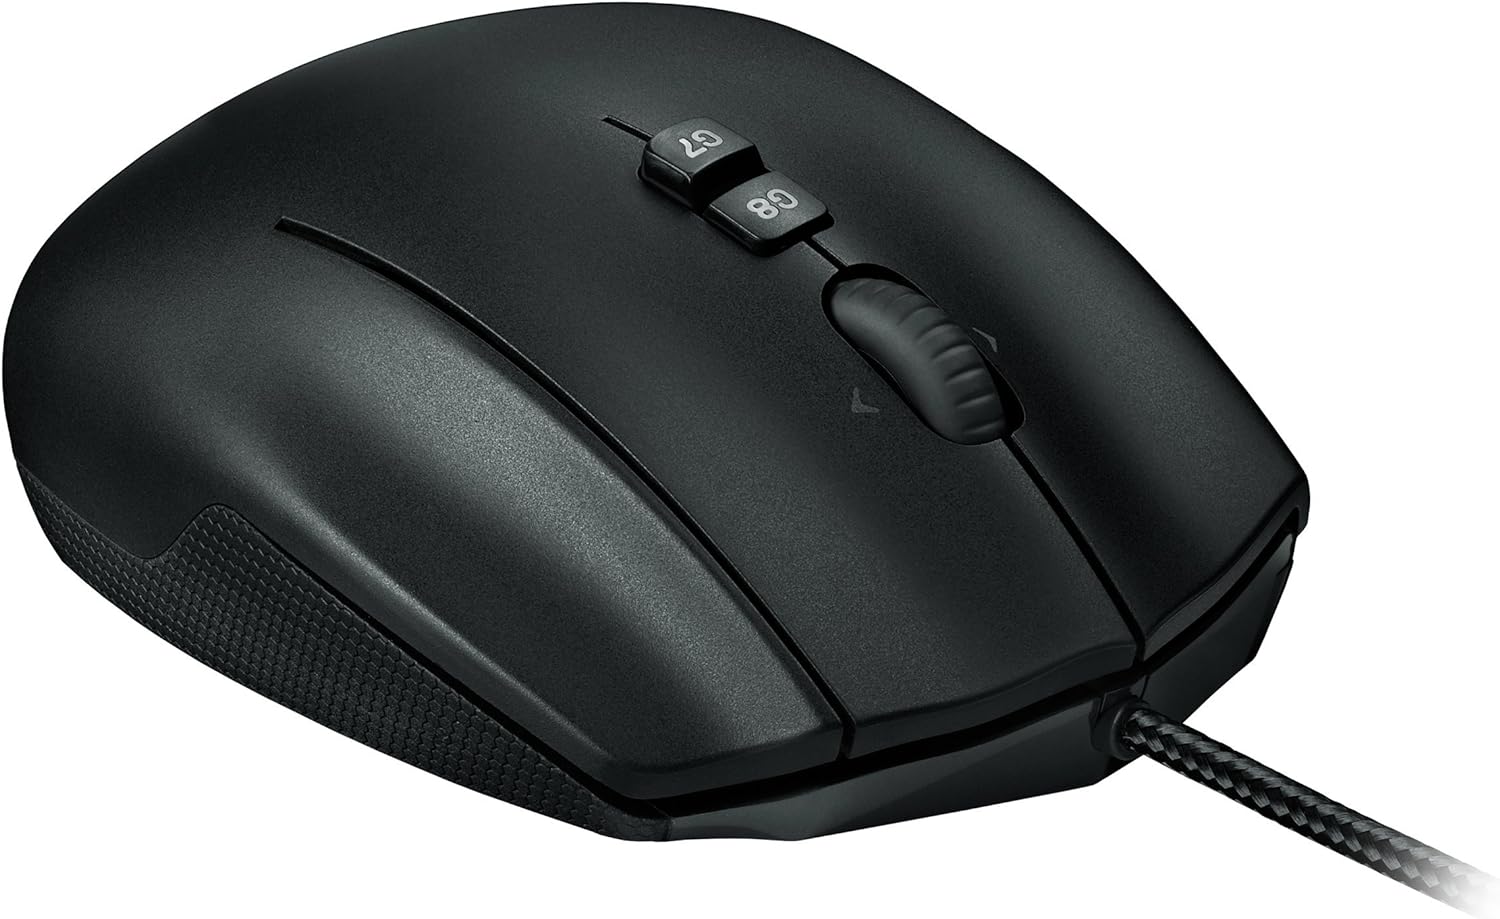 Screenshot of Logitech G600 MMO Mouse